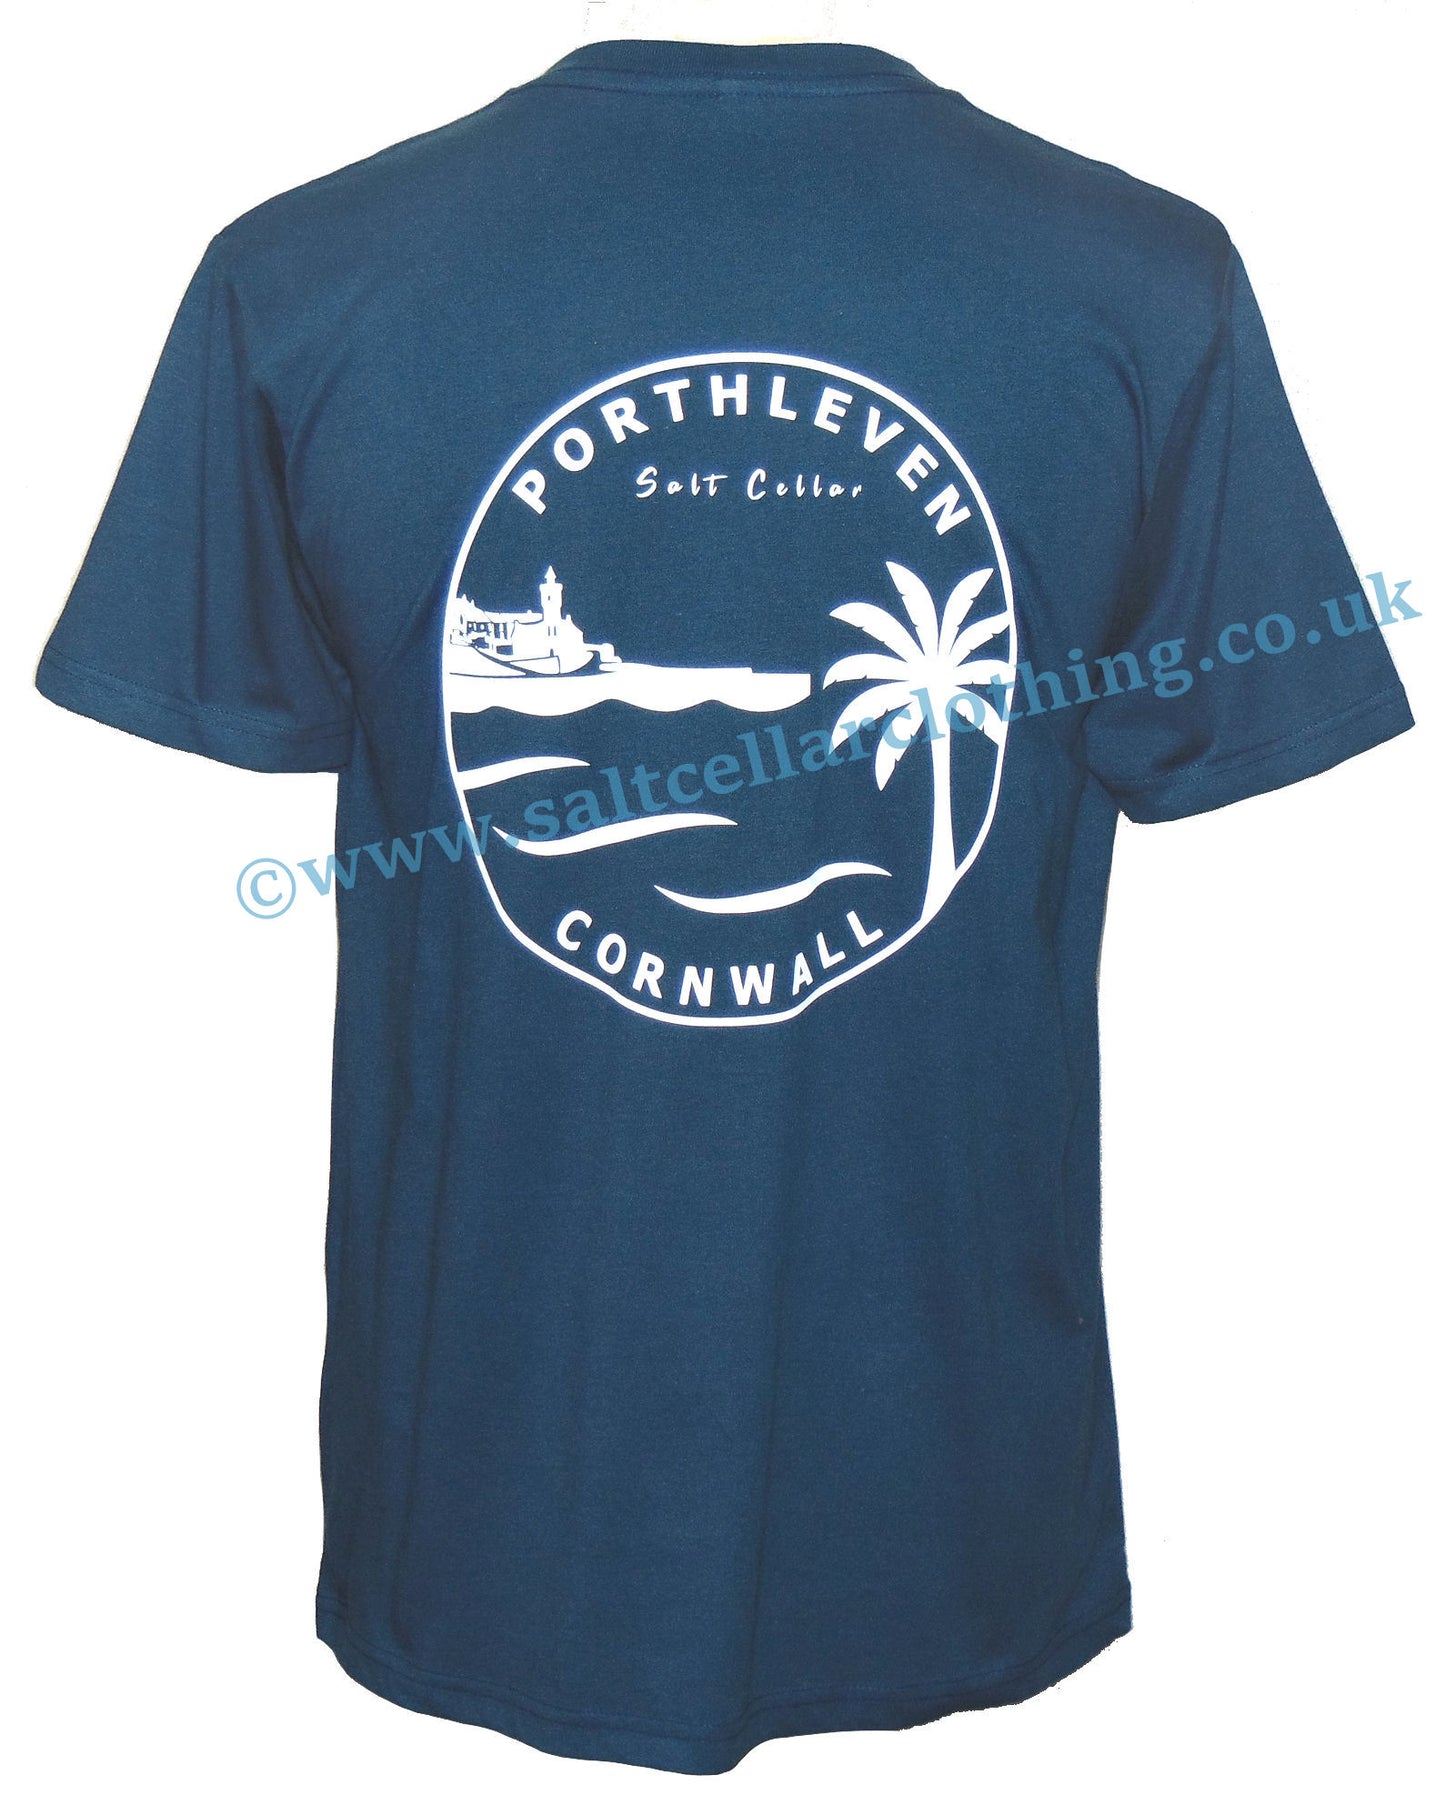 Men's Porthleven Cornwall print t-shirt in petrol blue from Salt Cellar